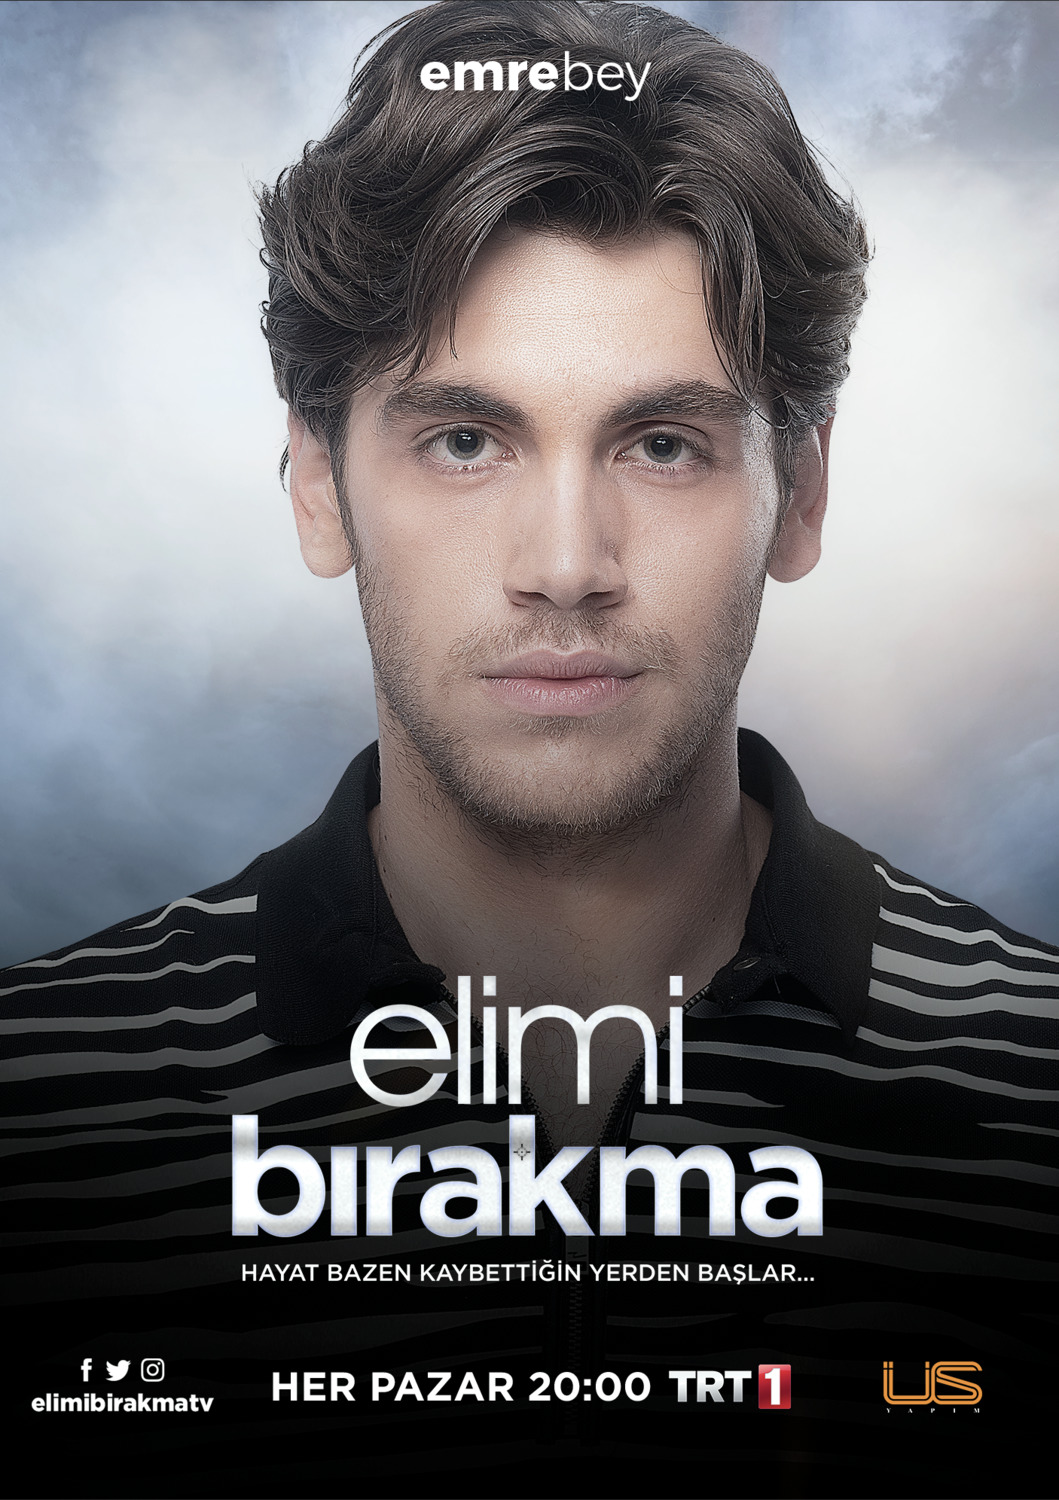 Extra Large TV Poster Image for Elimi birakma (#13 of 20)